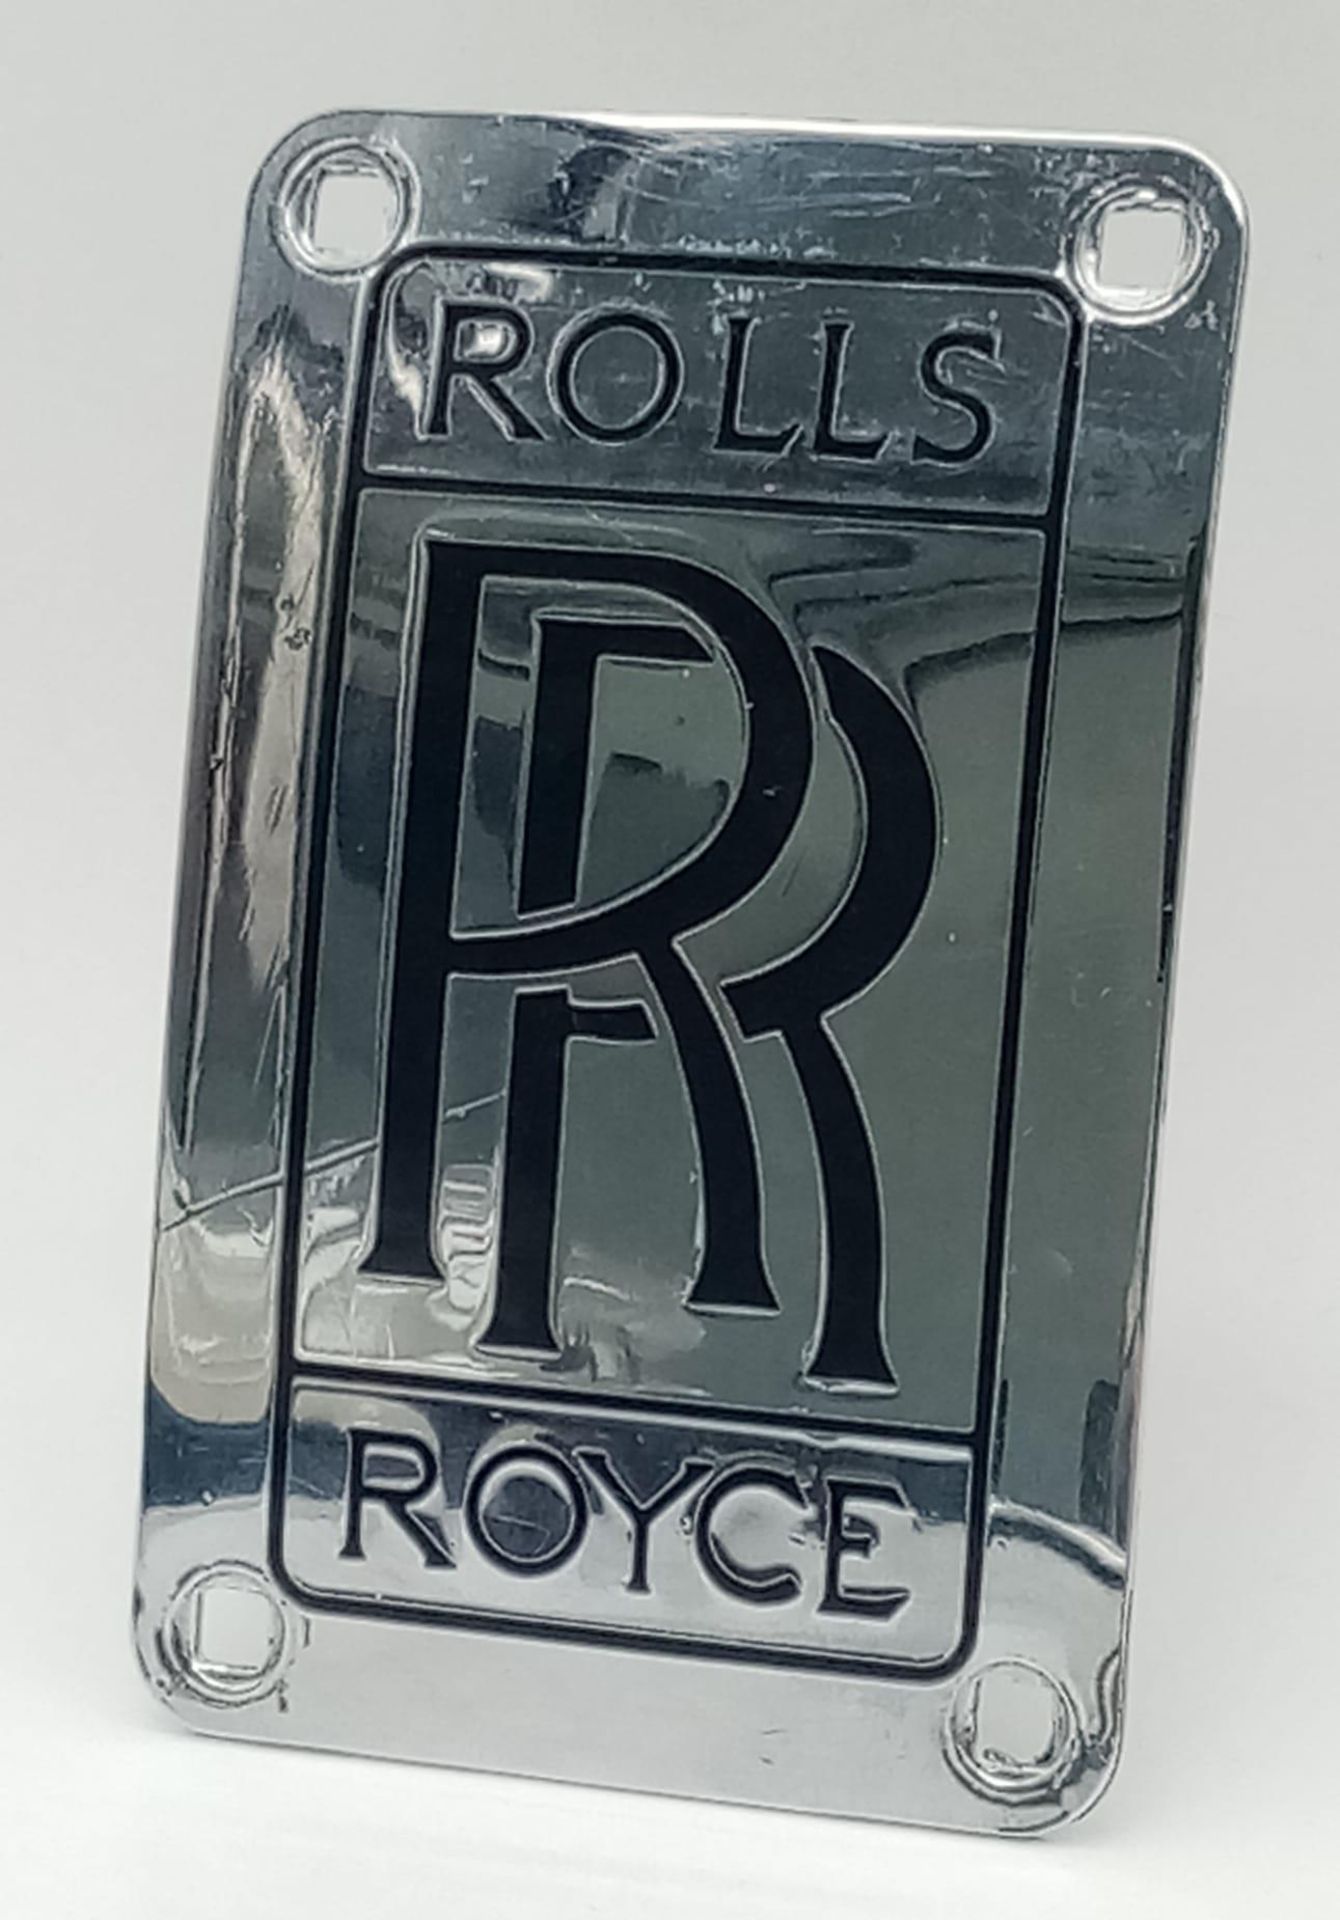 A Genuine Rolls Royce Car White Metal and Enamel Badge. Markings for RK 18357. 11cm x 7cm.